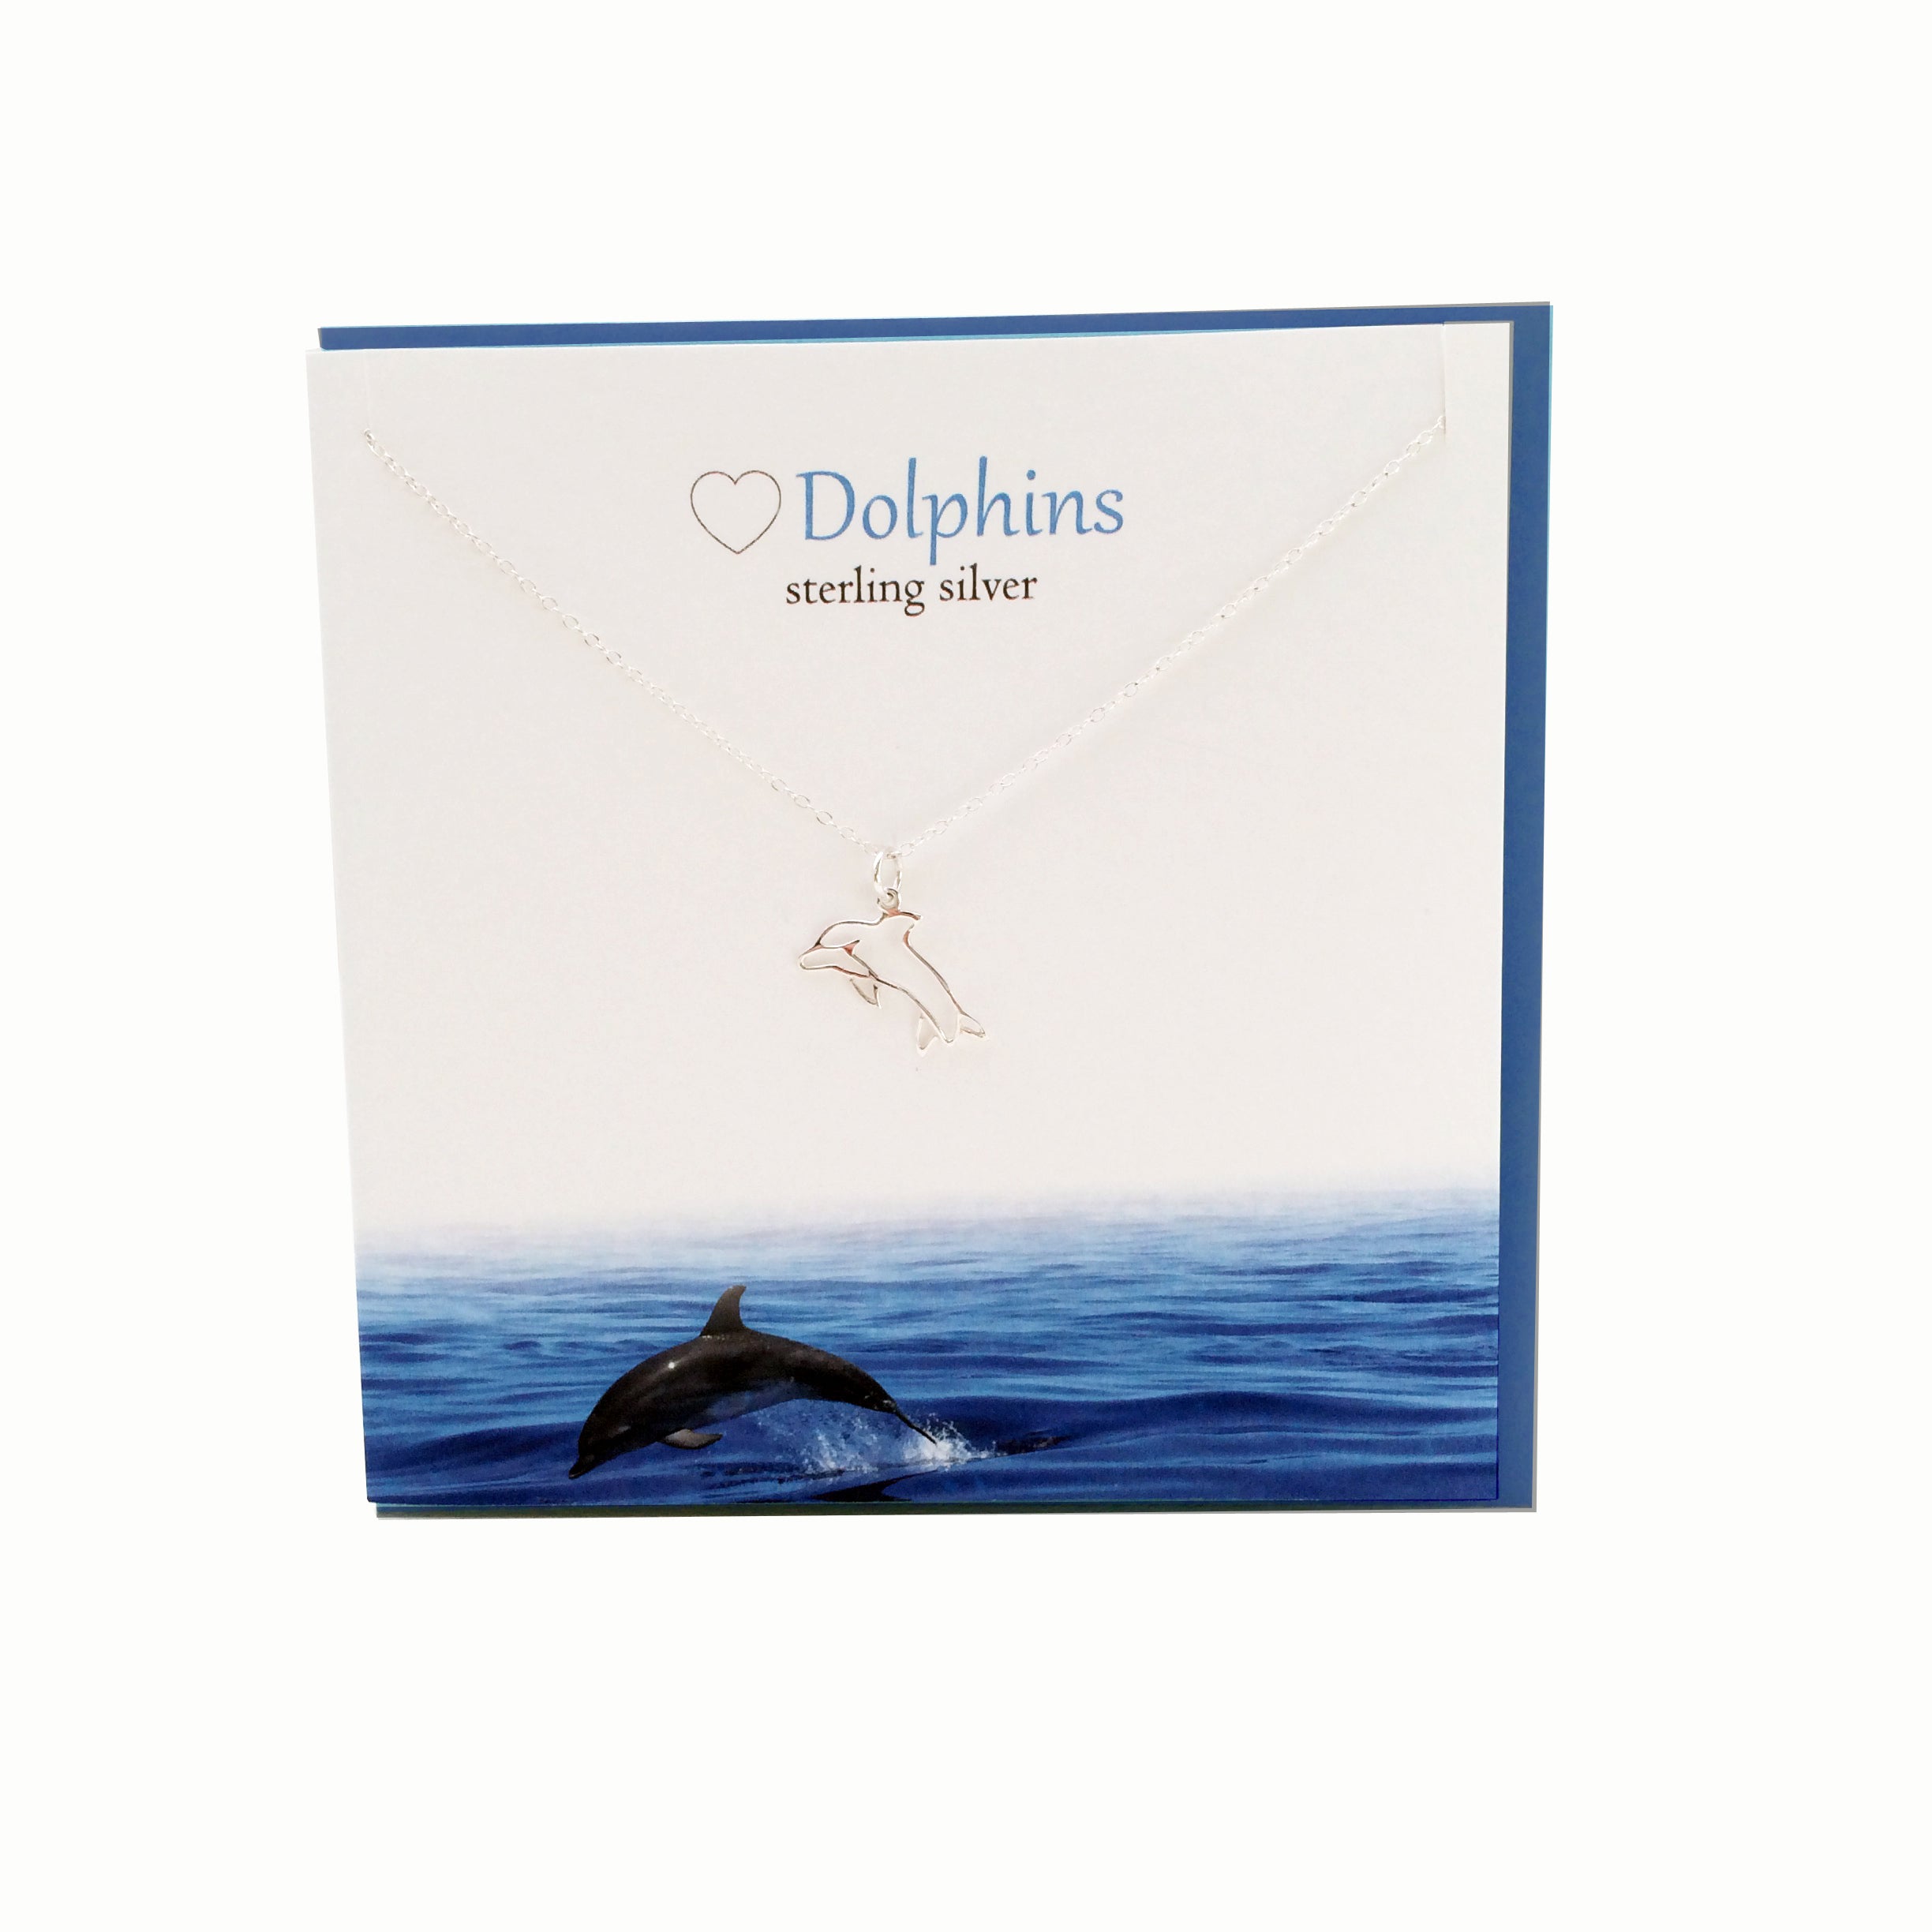 Dolphin silver necklace | The Silver Studio Scotland